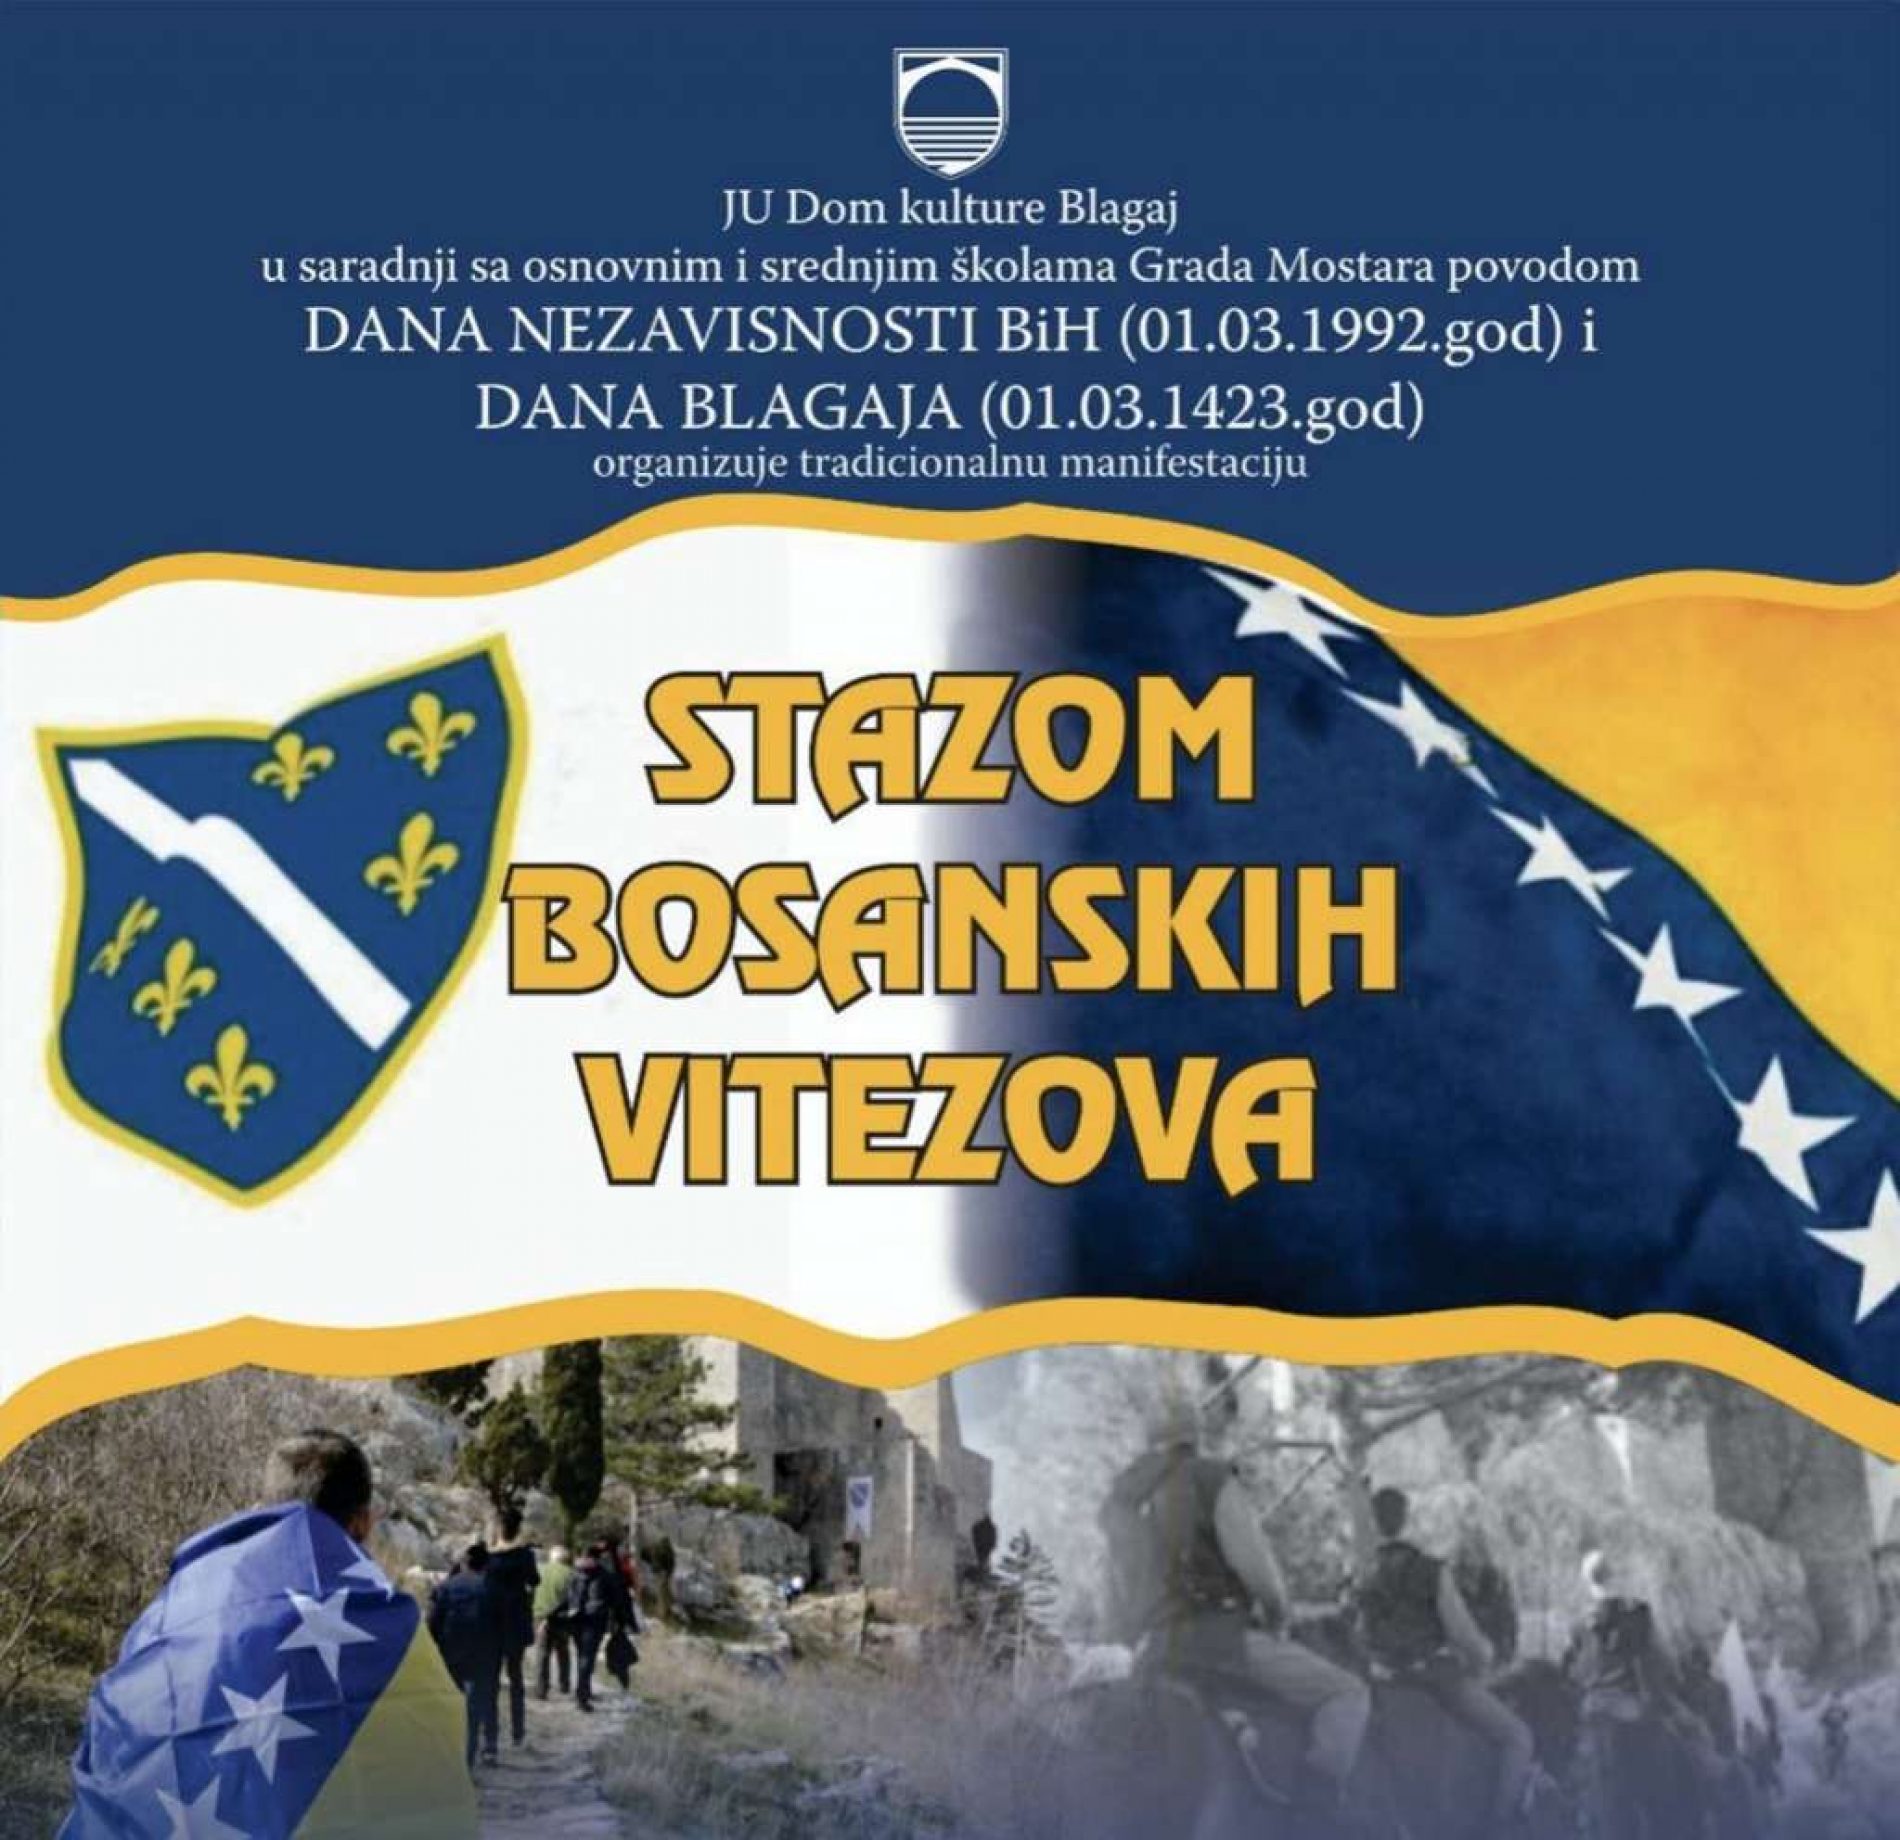 Manifestacijom ‘Stazom bosanskih vitezova’ obilježava se Dan nezavisnosti Bosne i Hercegovine